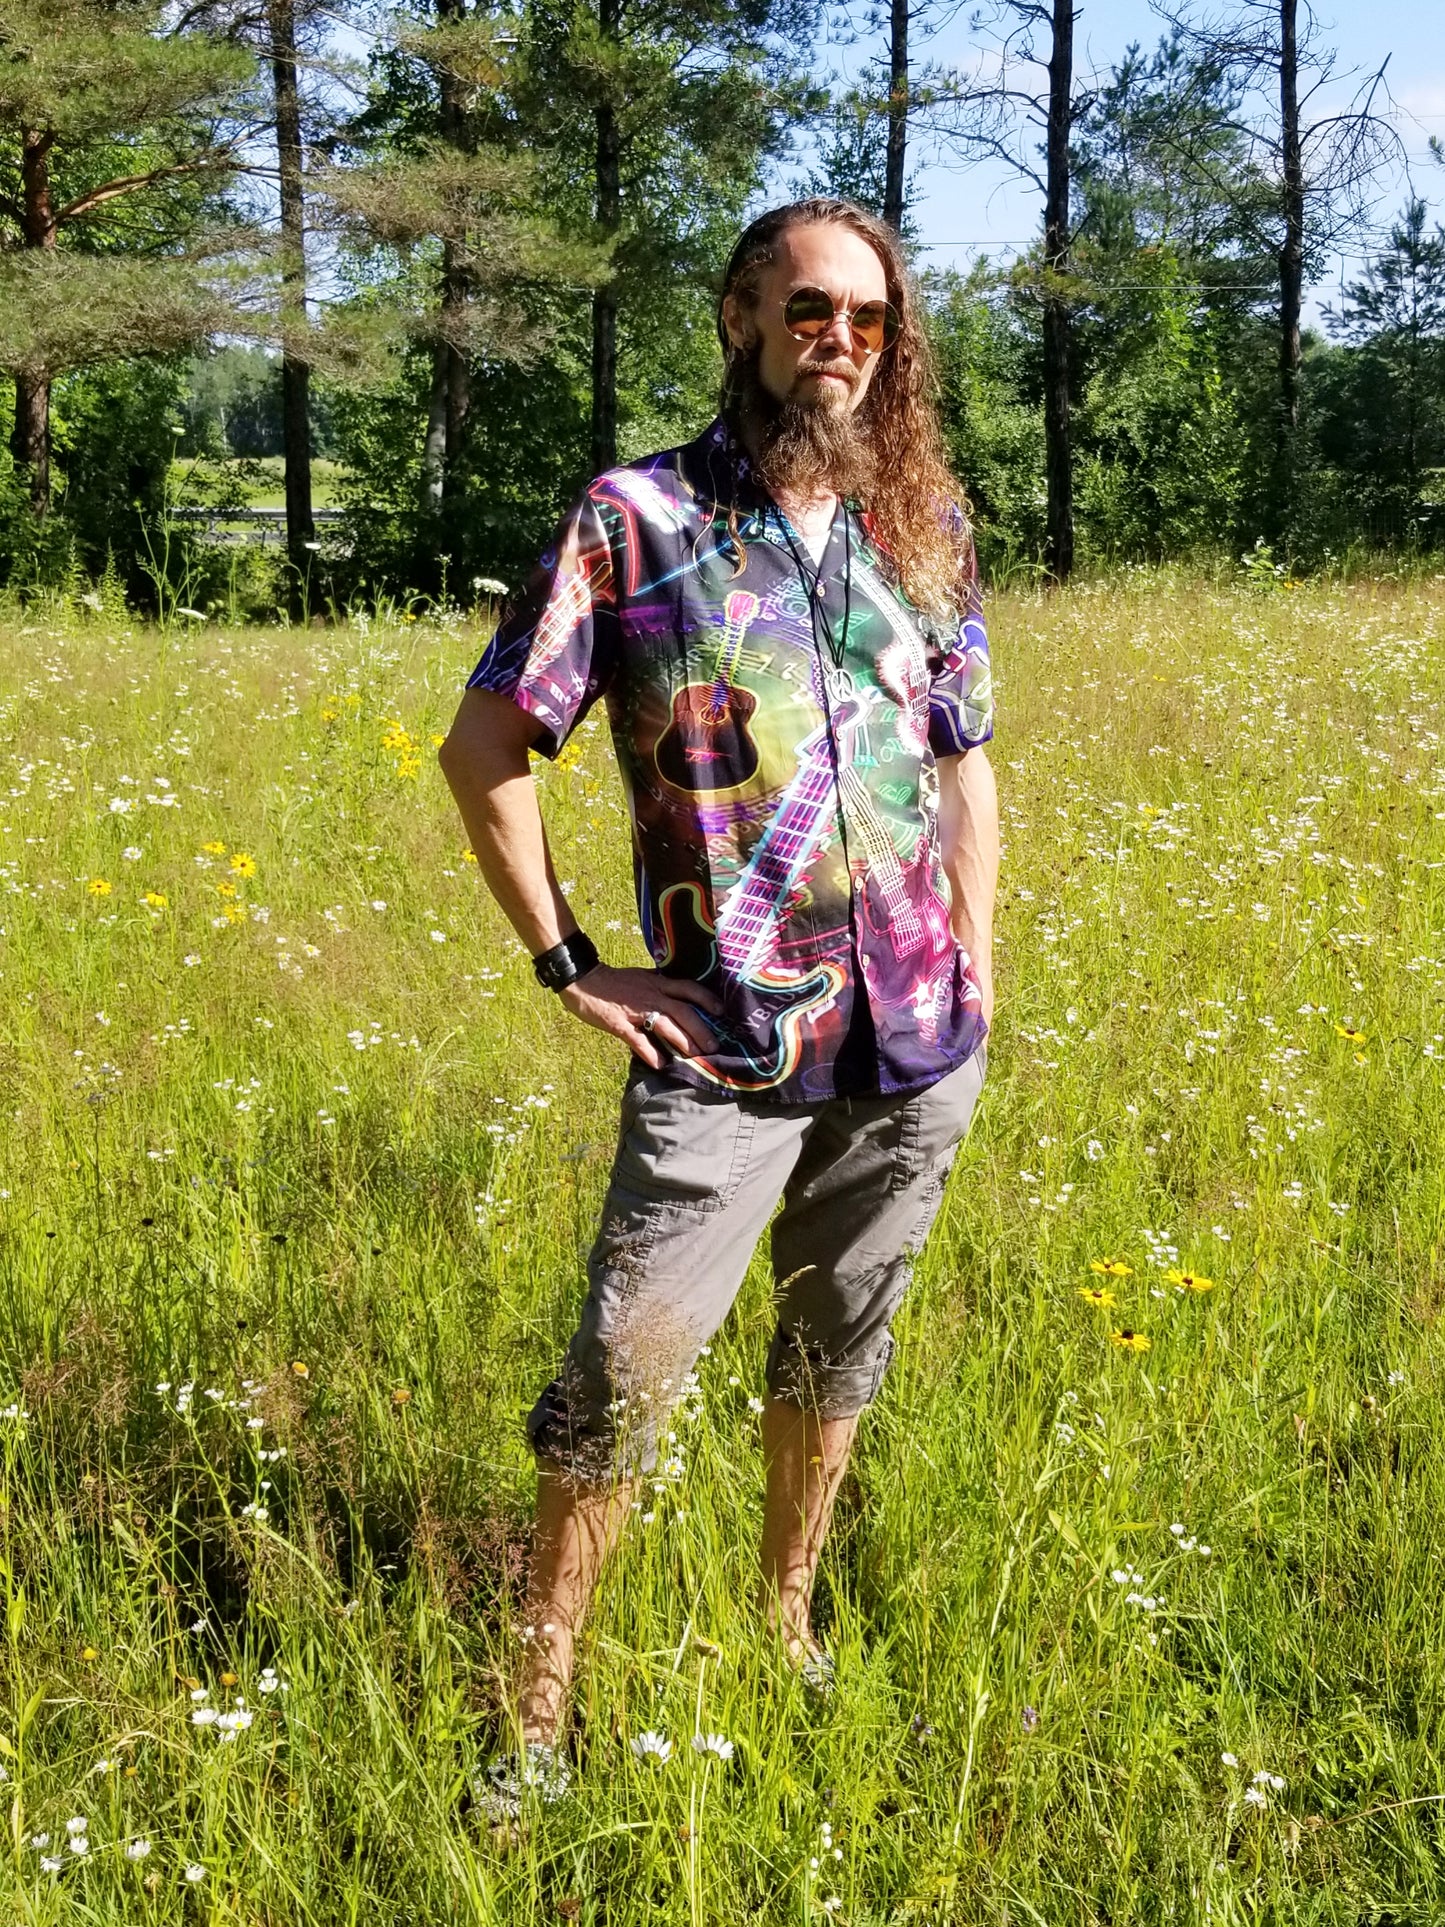 mens guitar button up shirt at the boho hippie hut midland michigan